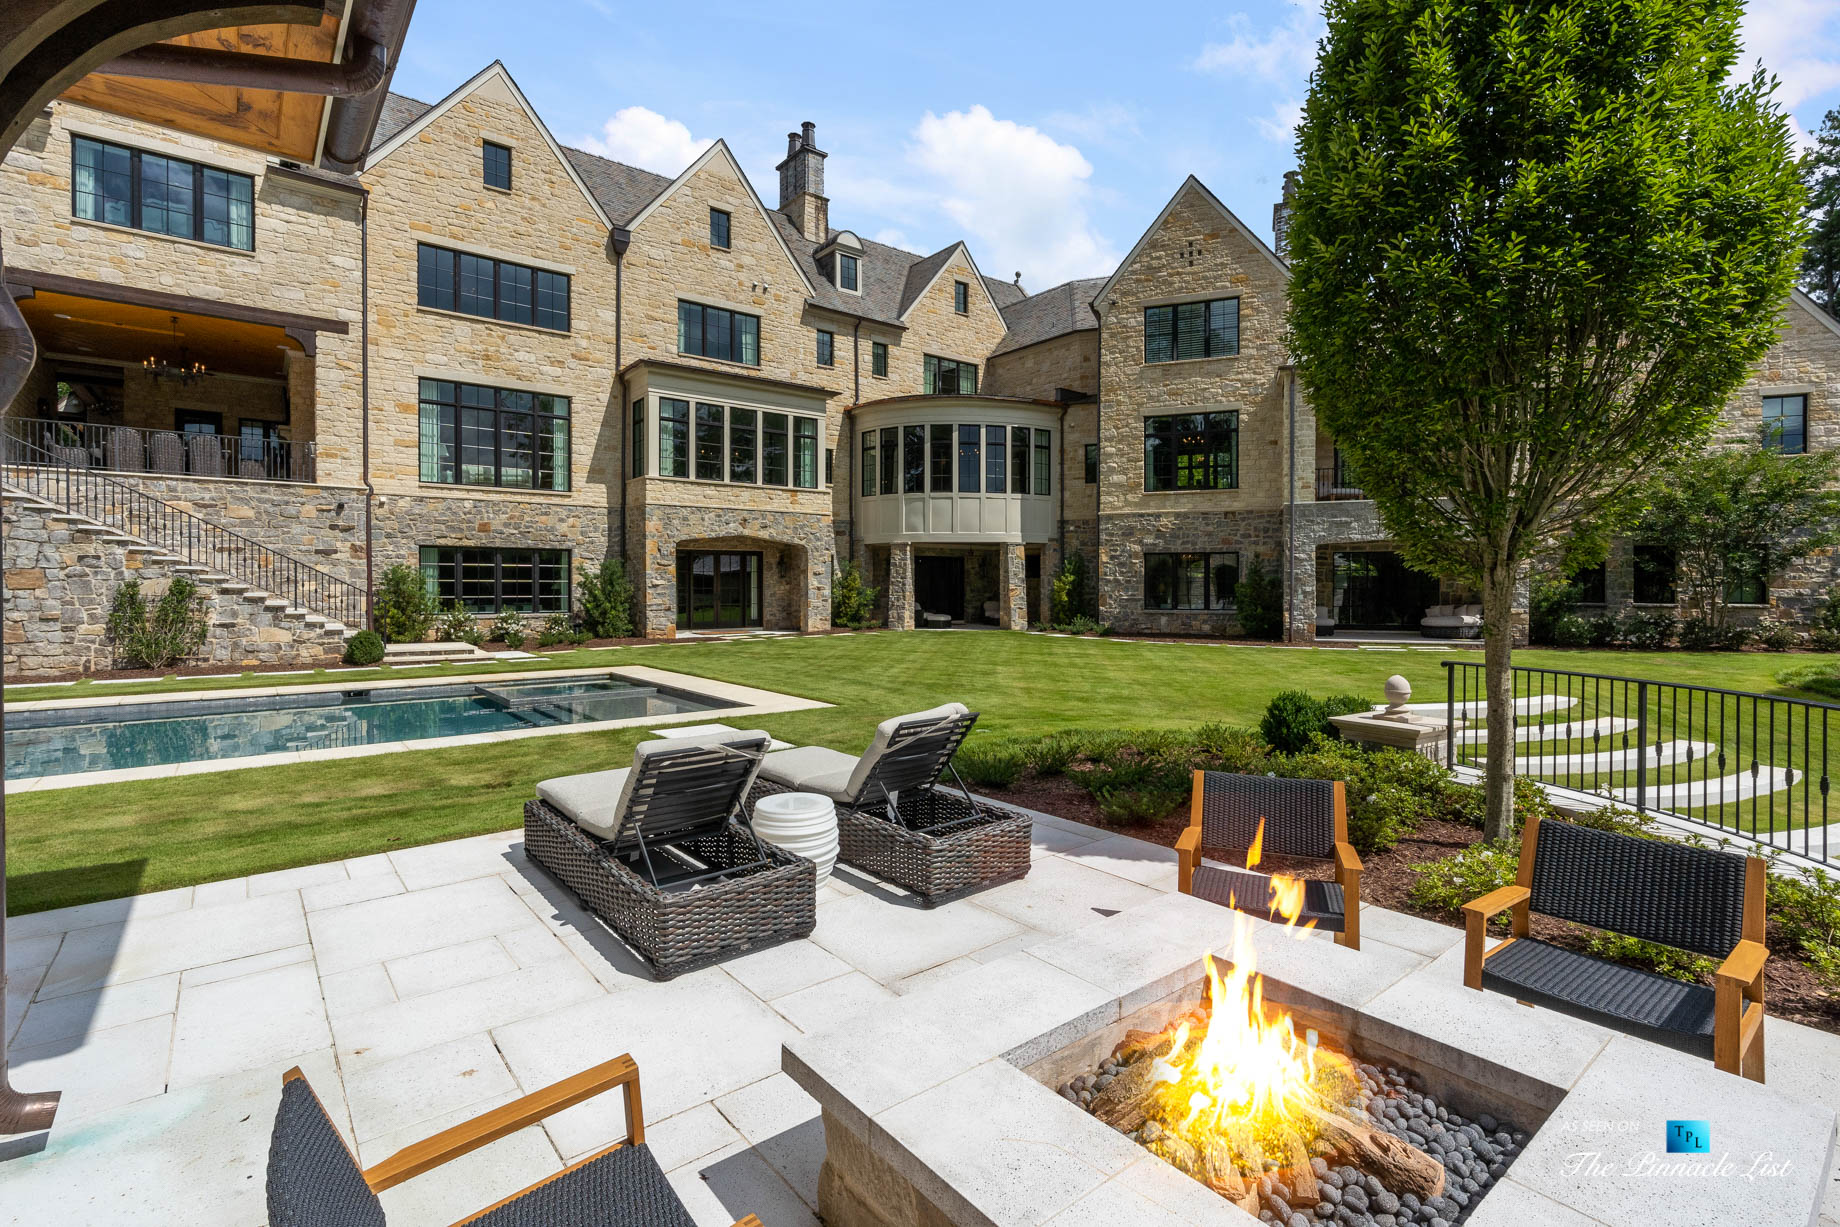 1150 W Garmon Rd, Atlanta, GA, USA – Backyard Fire Pit Patio with Pool – Luxury Real Estate – Buckhead Estate Home